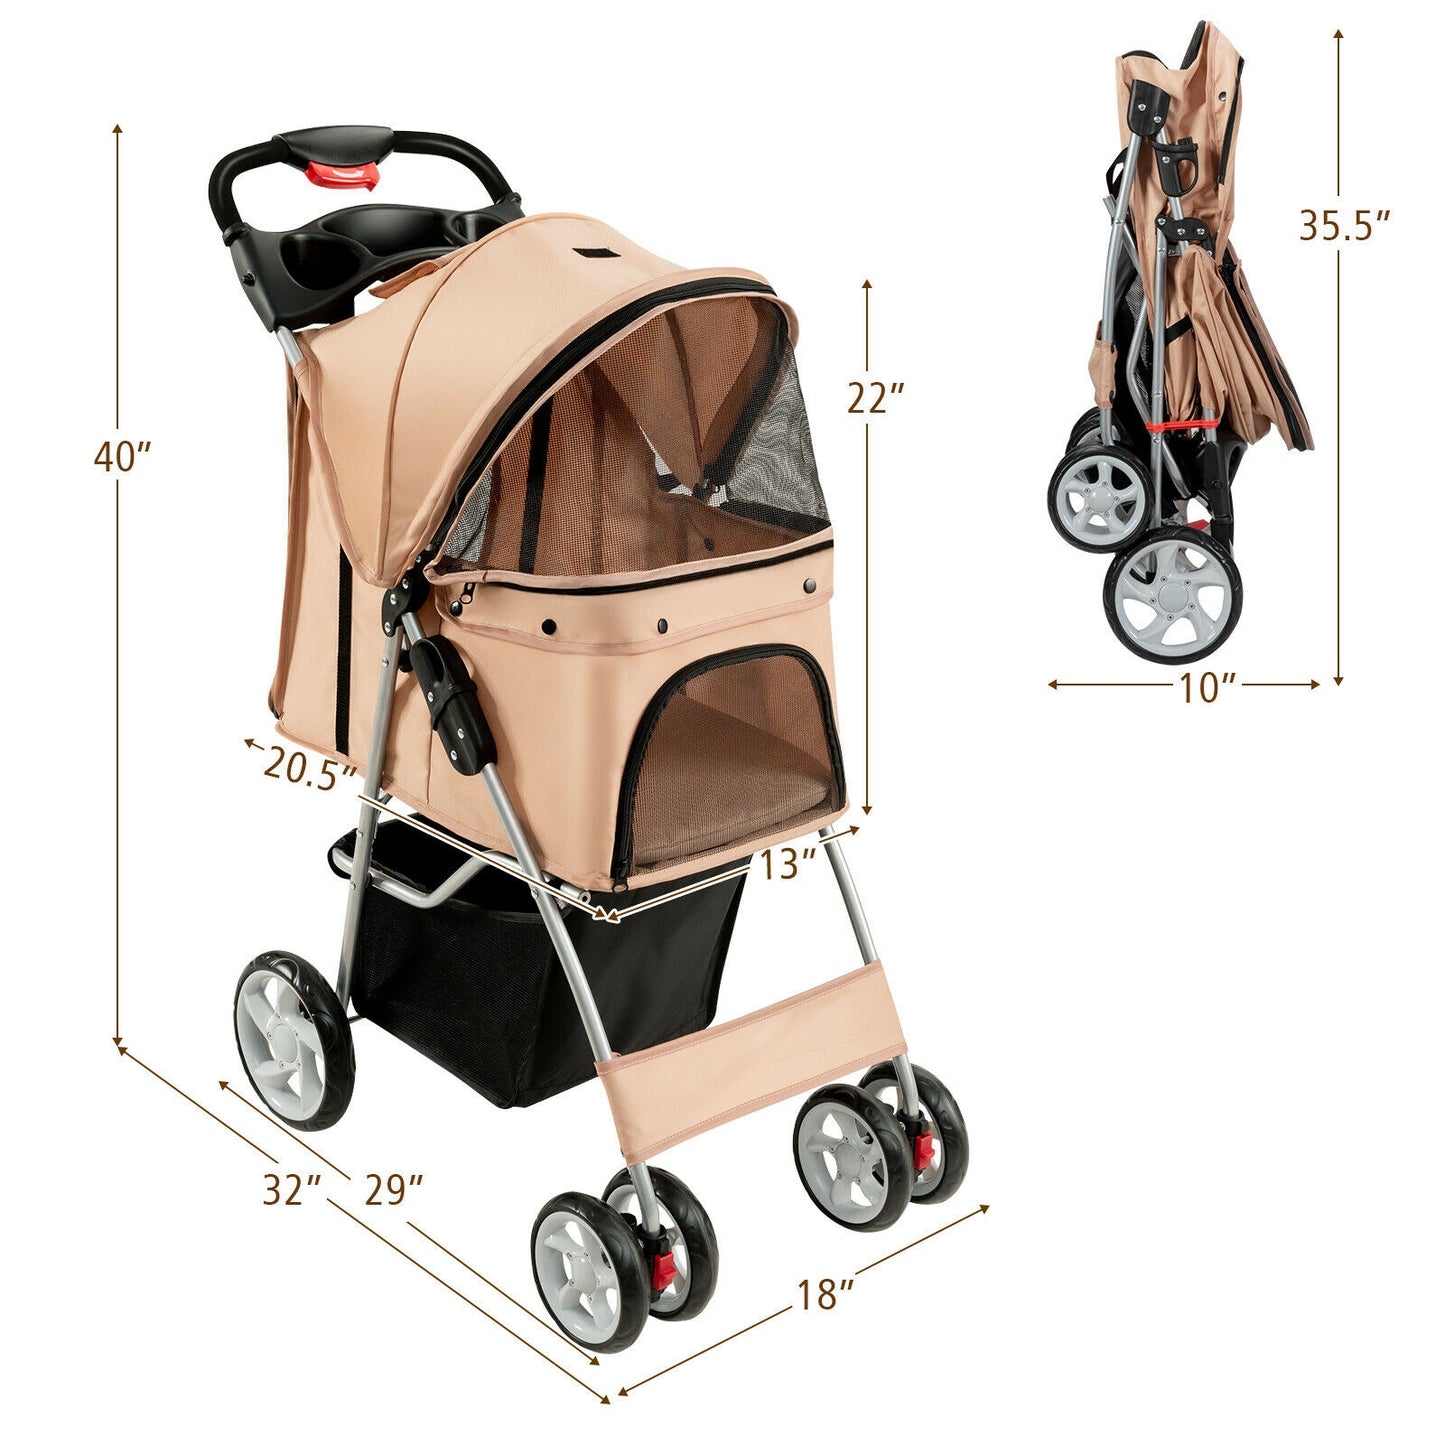 Foldable 4-Wheel Pet Stroller with Storage Basket-Beige